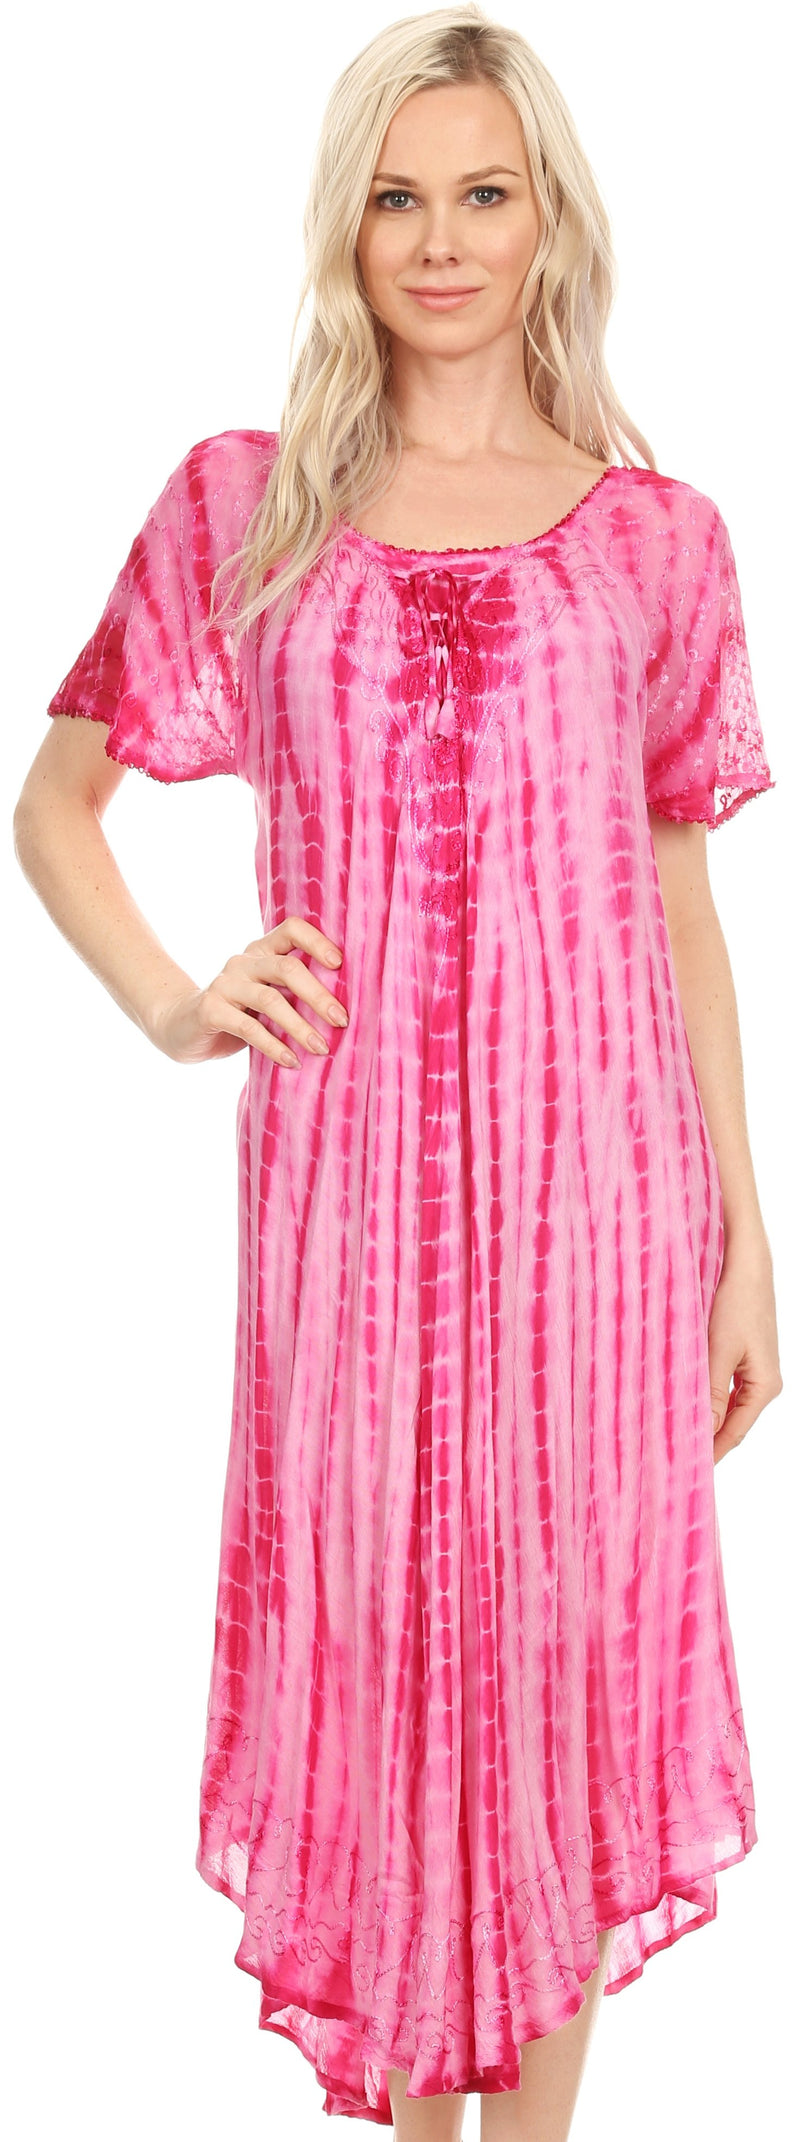 Sakkas Yasmin Tie Dye Embroidered Sheer Cap Sleeve Sundress | Cover Up